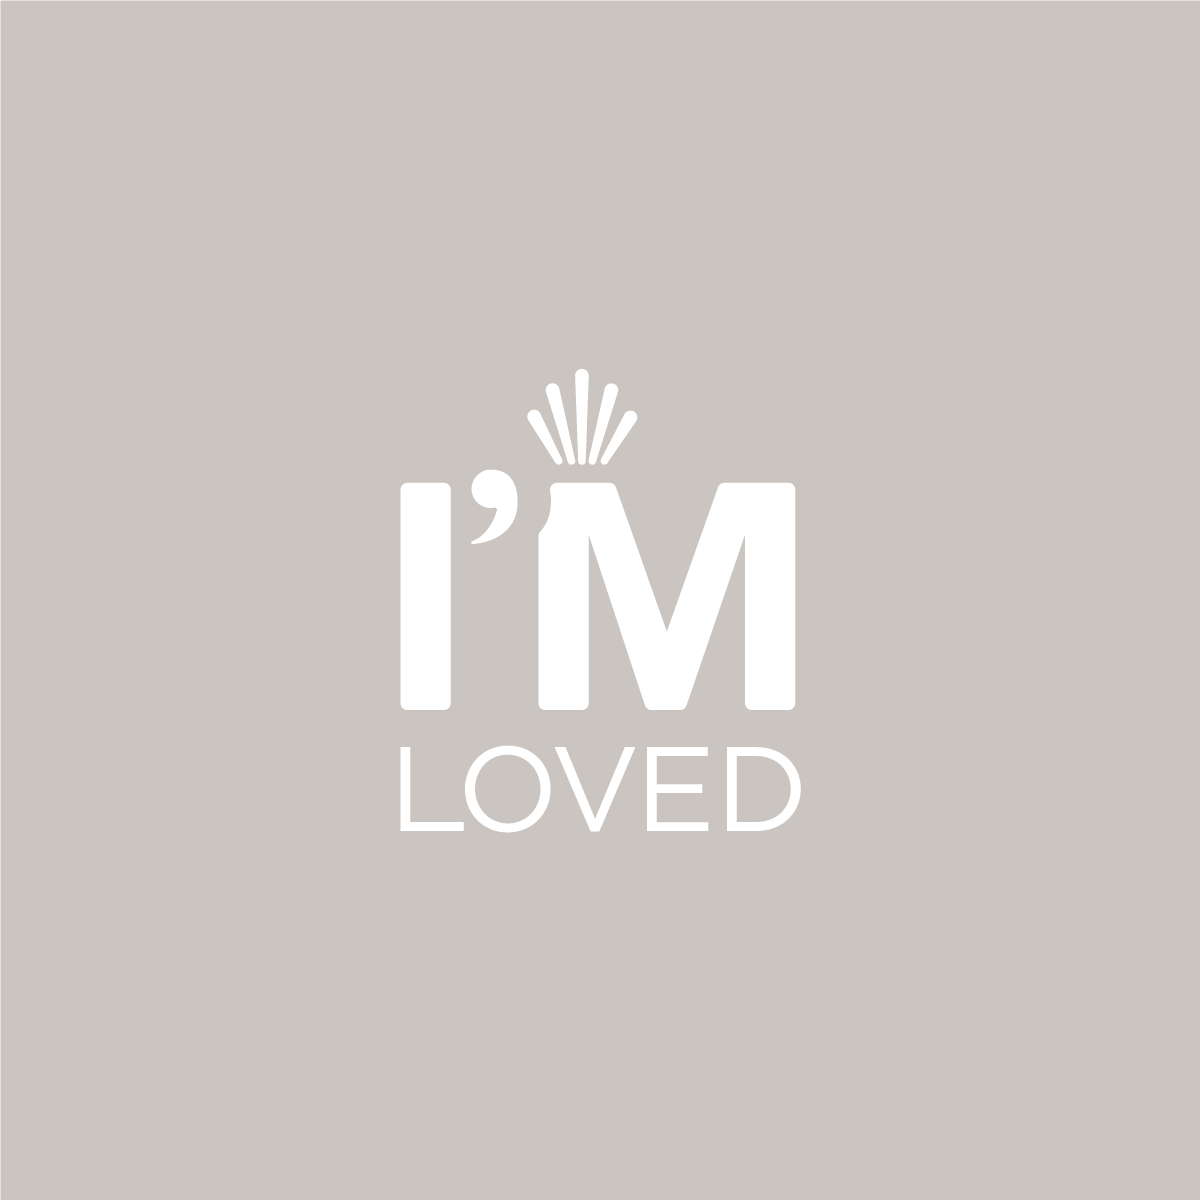 I am loved logo